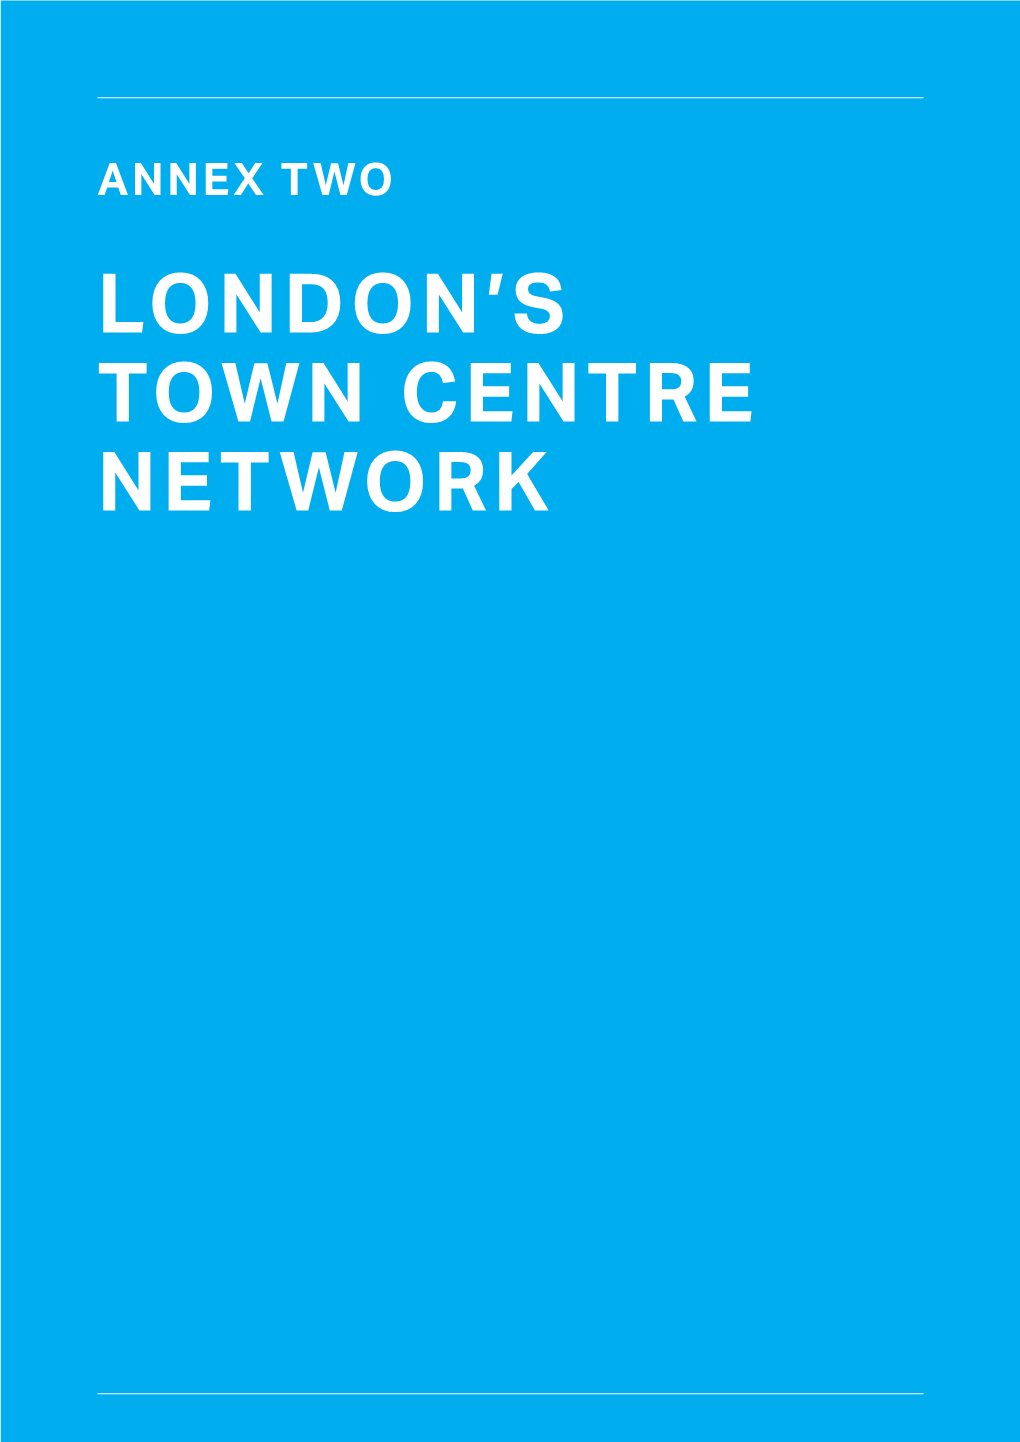 London Plan's Town Centre Network